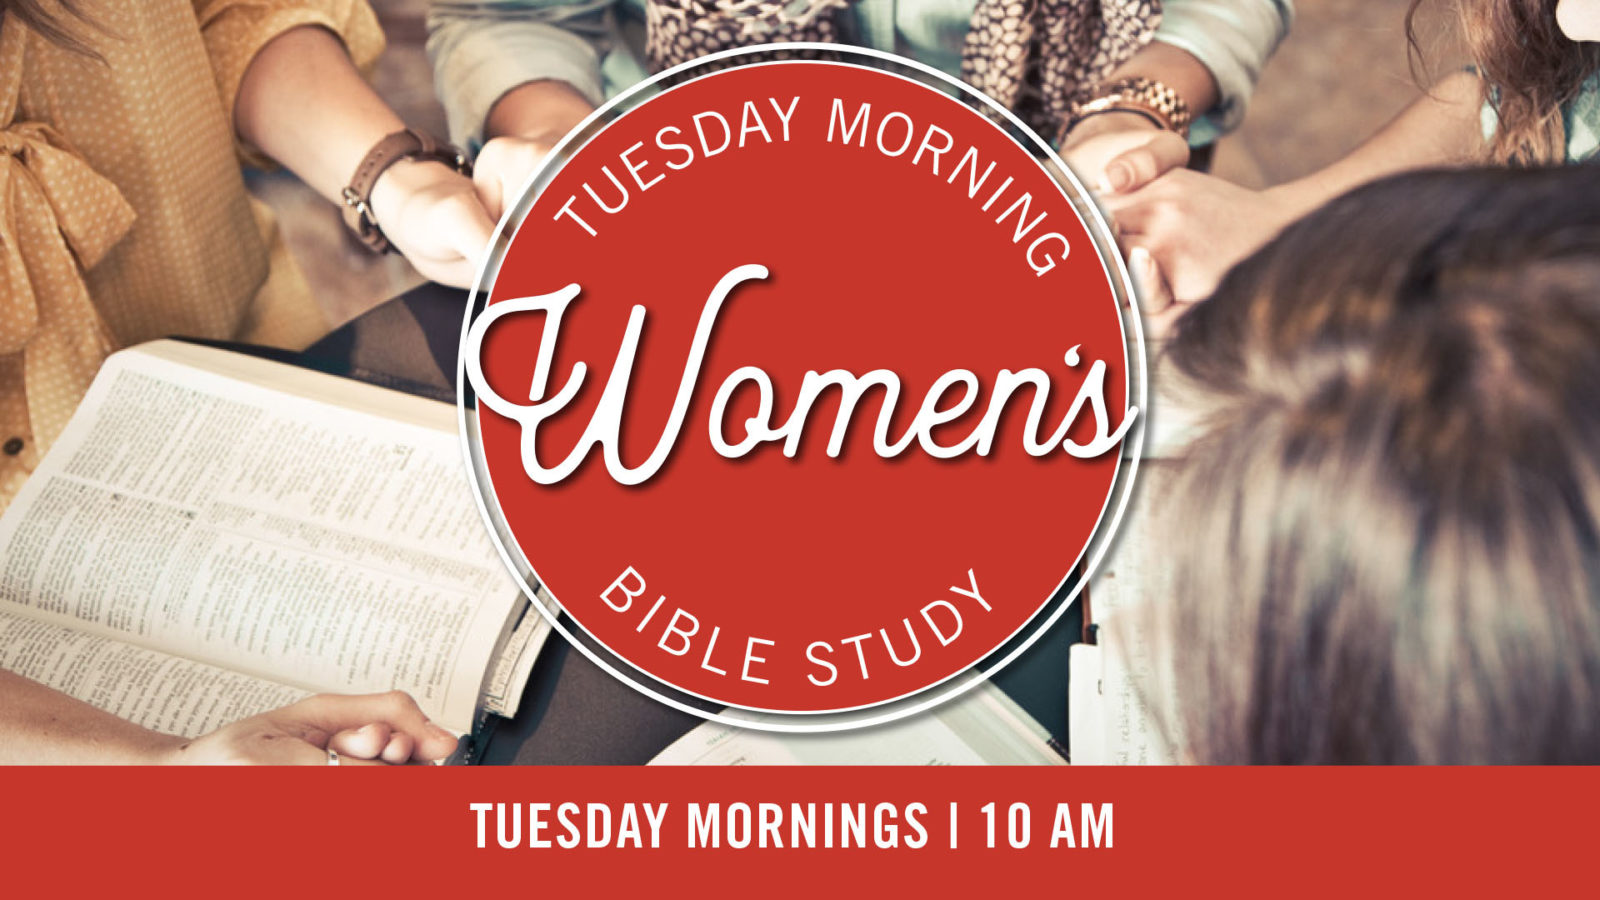 WOMEN’S TUESDAY MORNING BIBLE STUDY